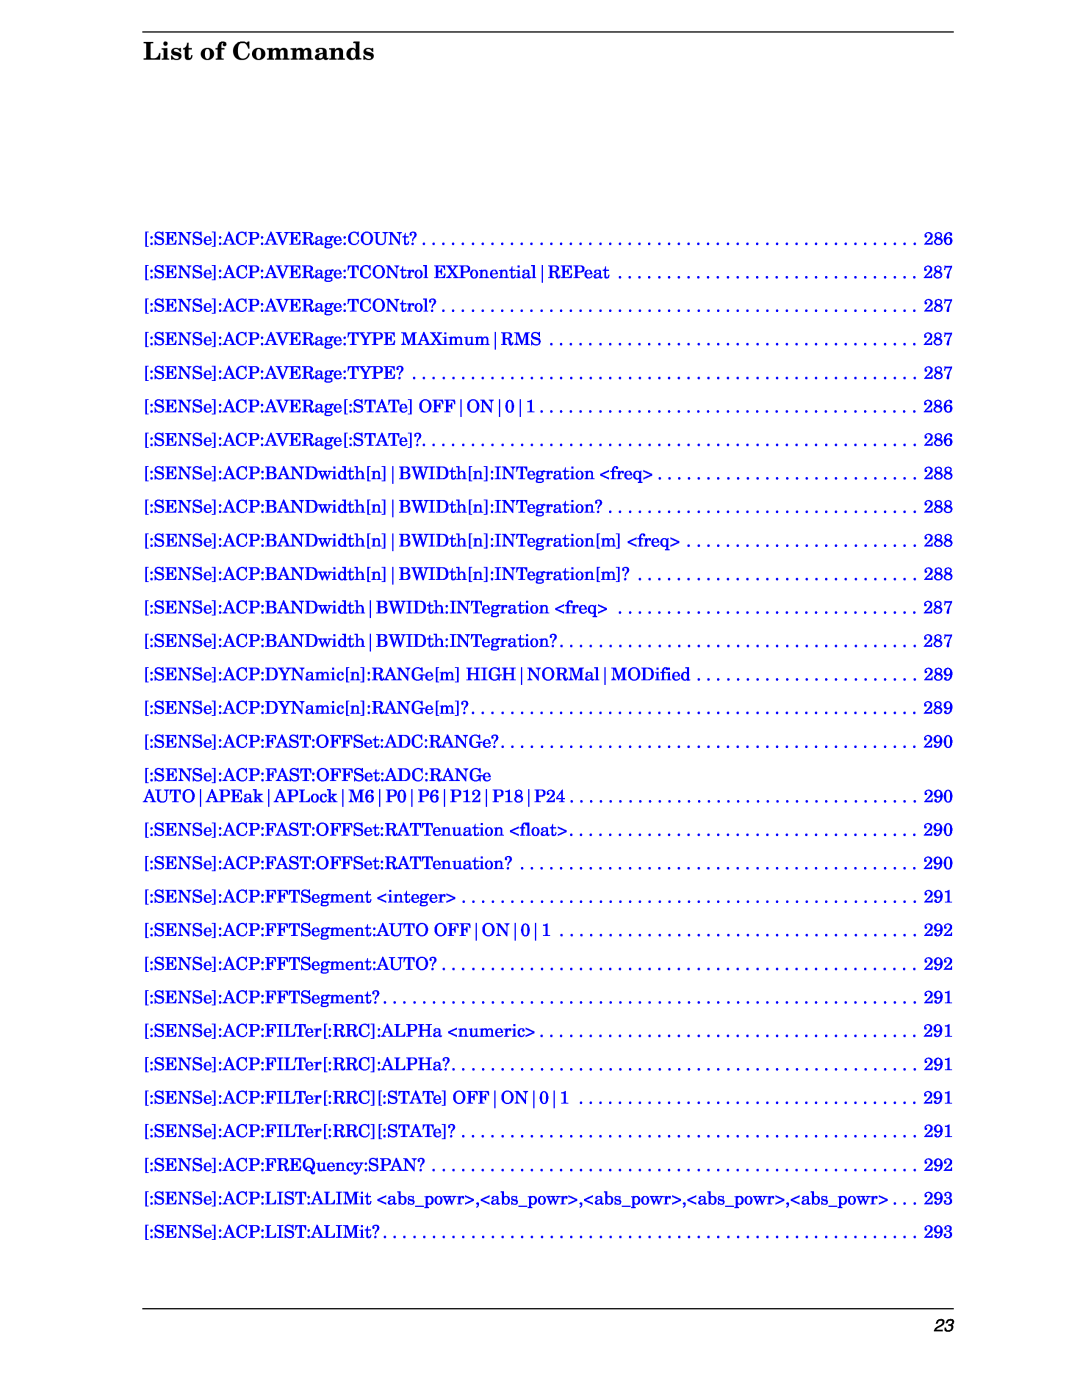 Agilent Technologies E4406A VSA manual List of Commands, SENSe:ACP:FAST:OFFSet:ADC:RANGe 